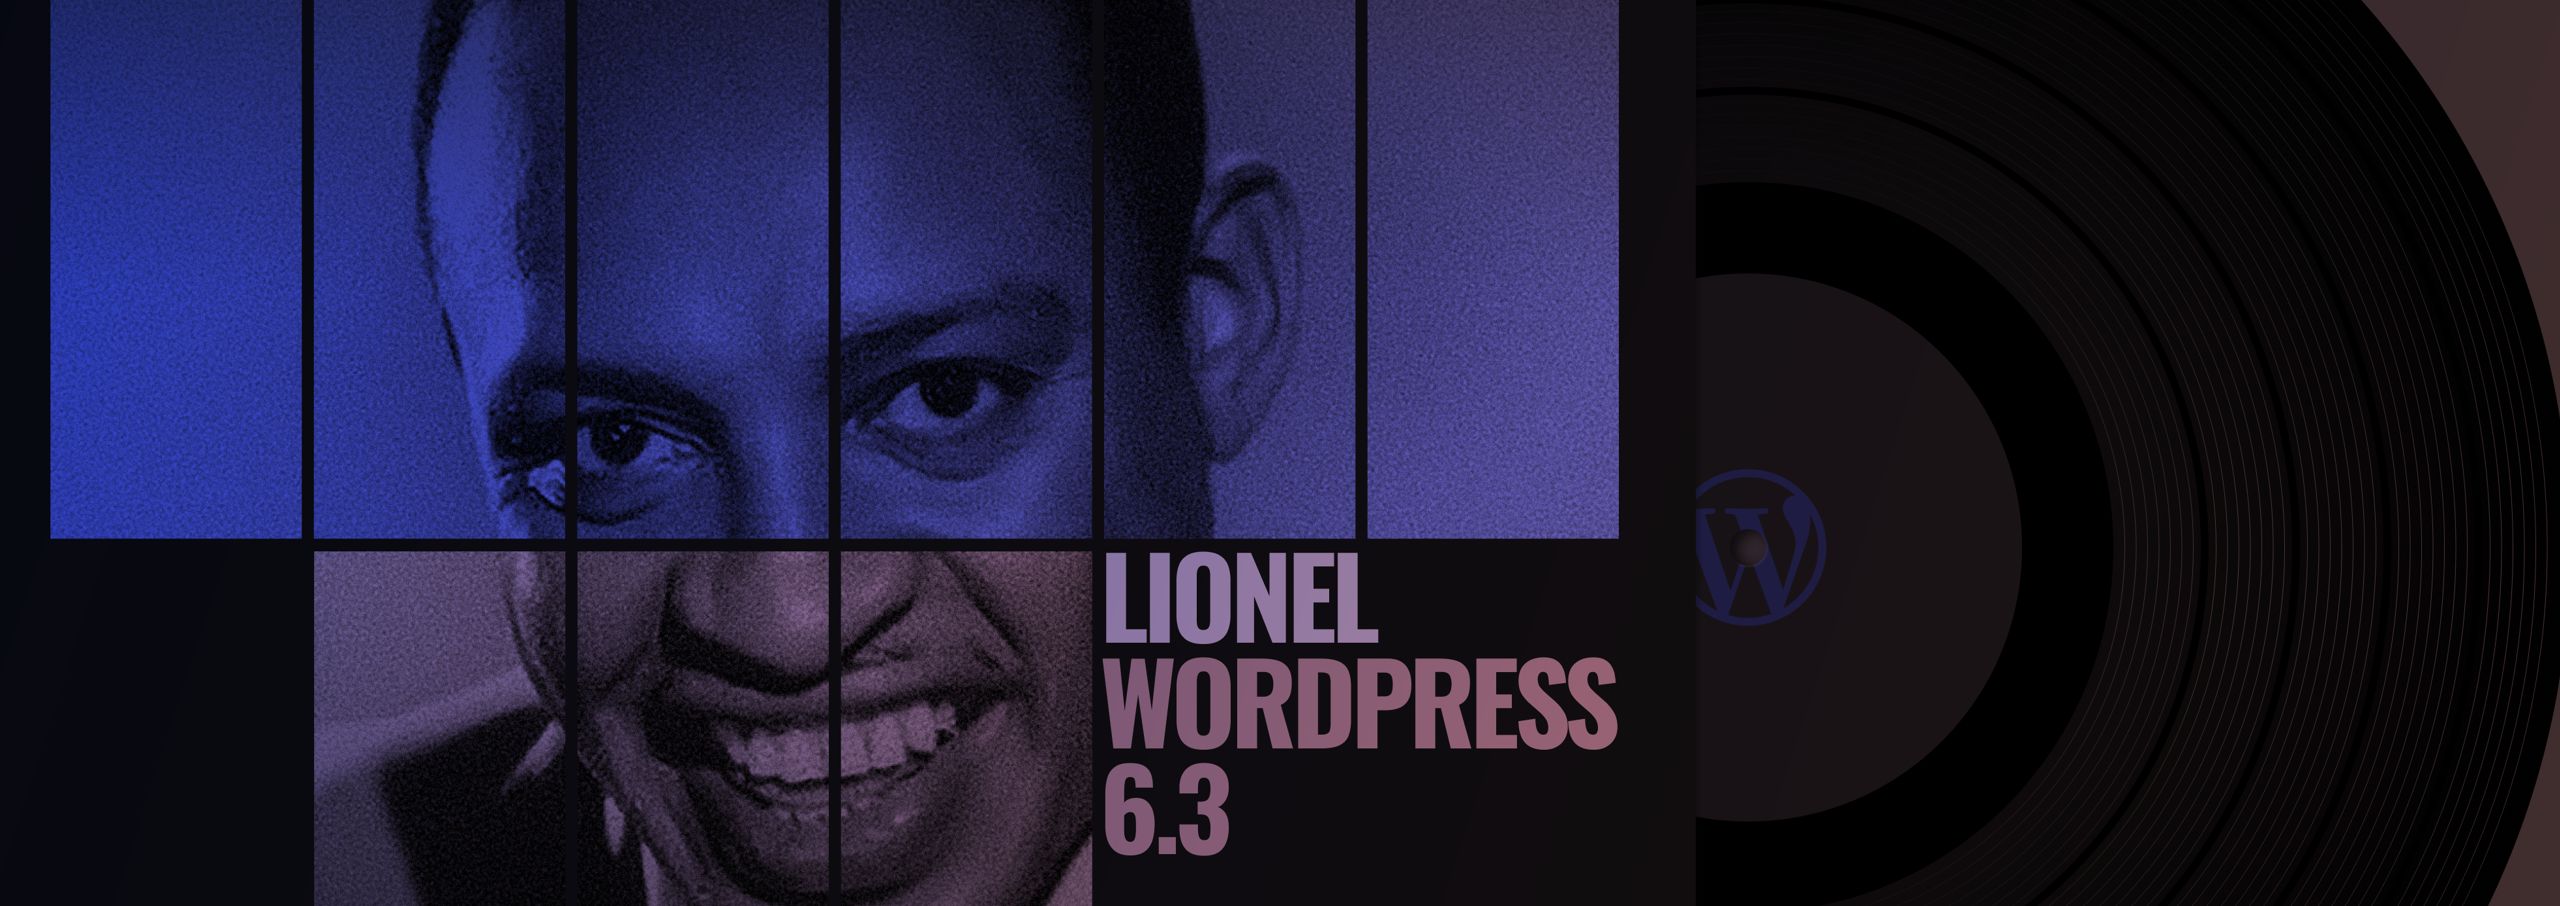 WordPress 6.3 “Lionel” Released